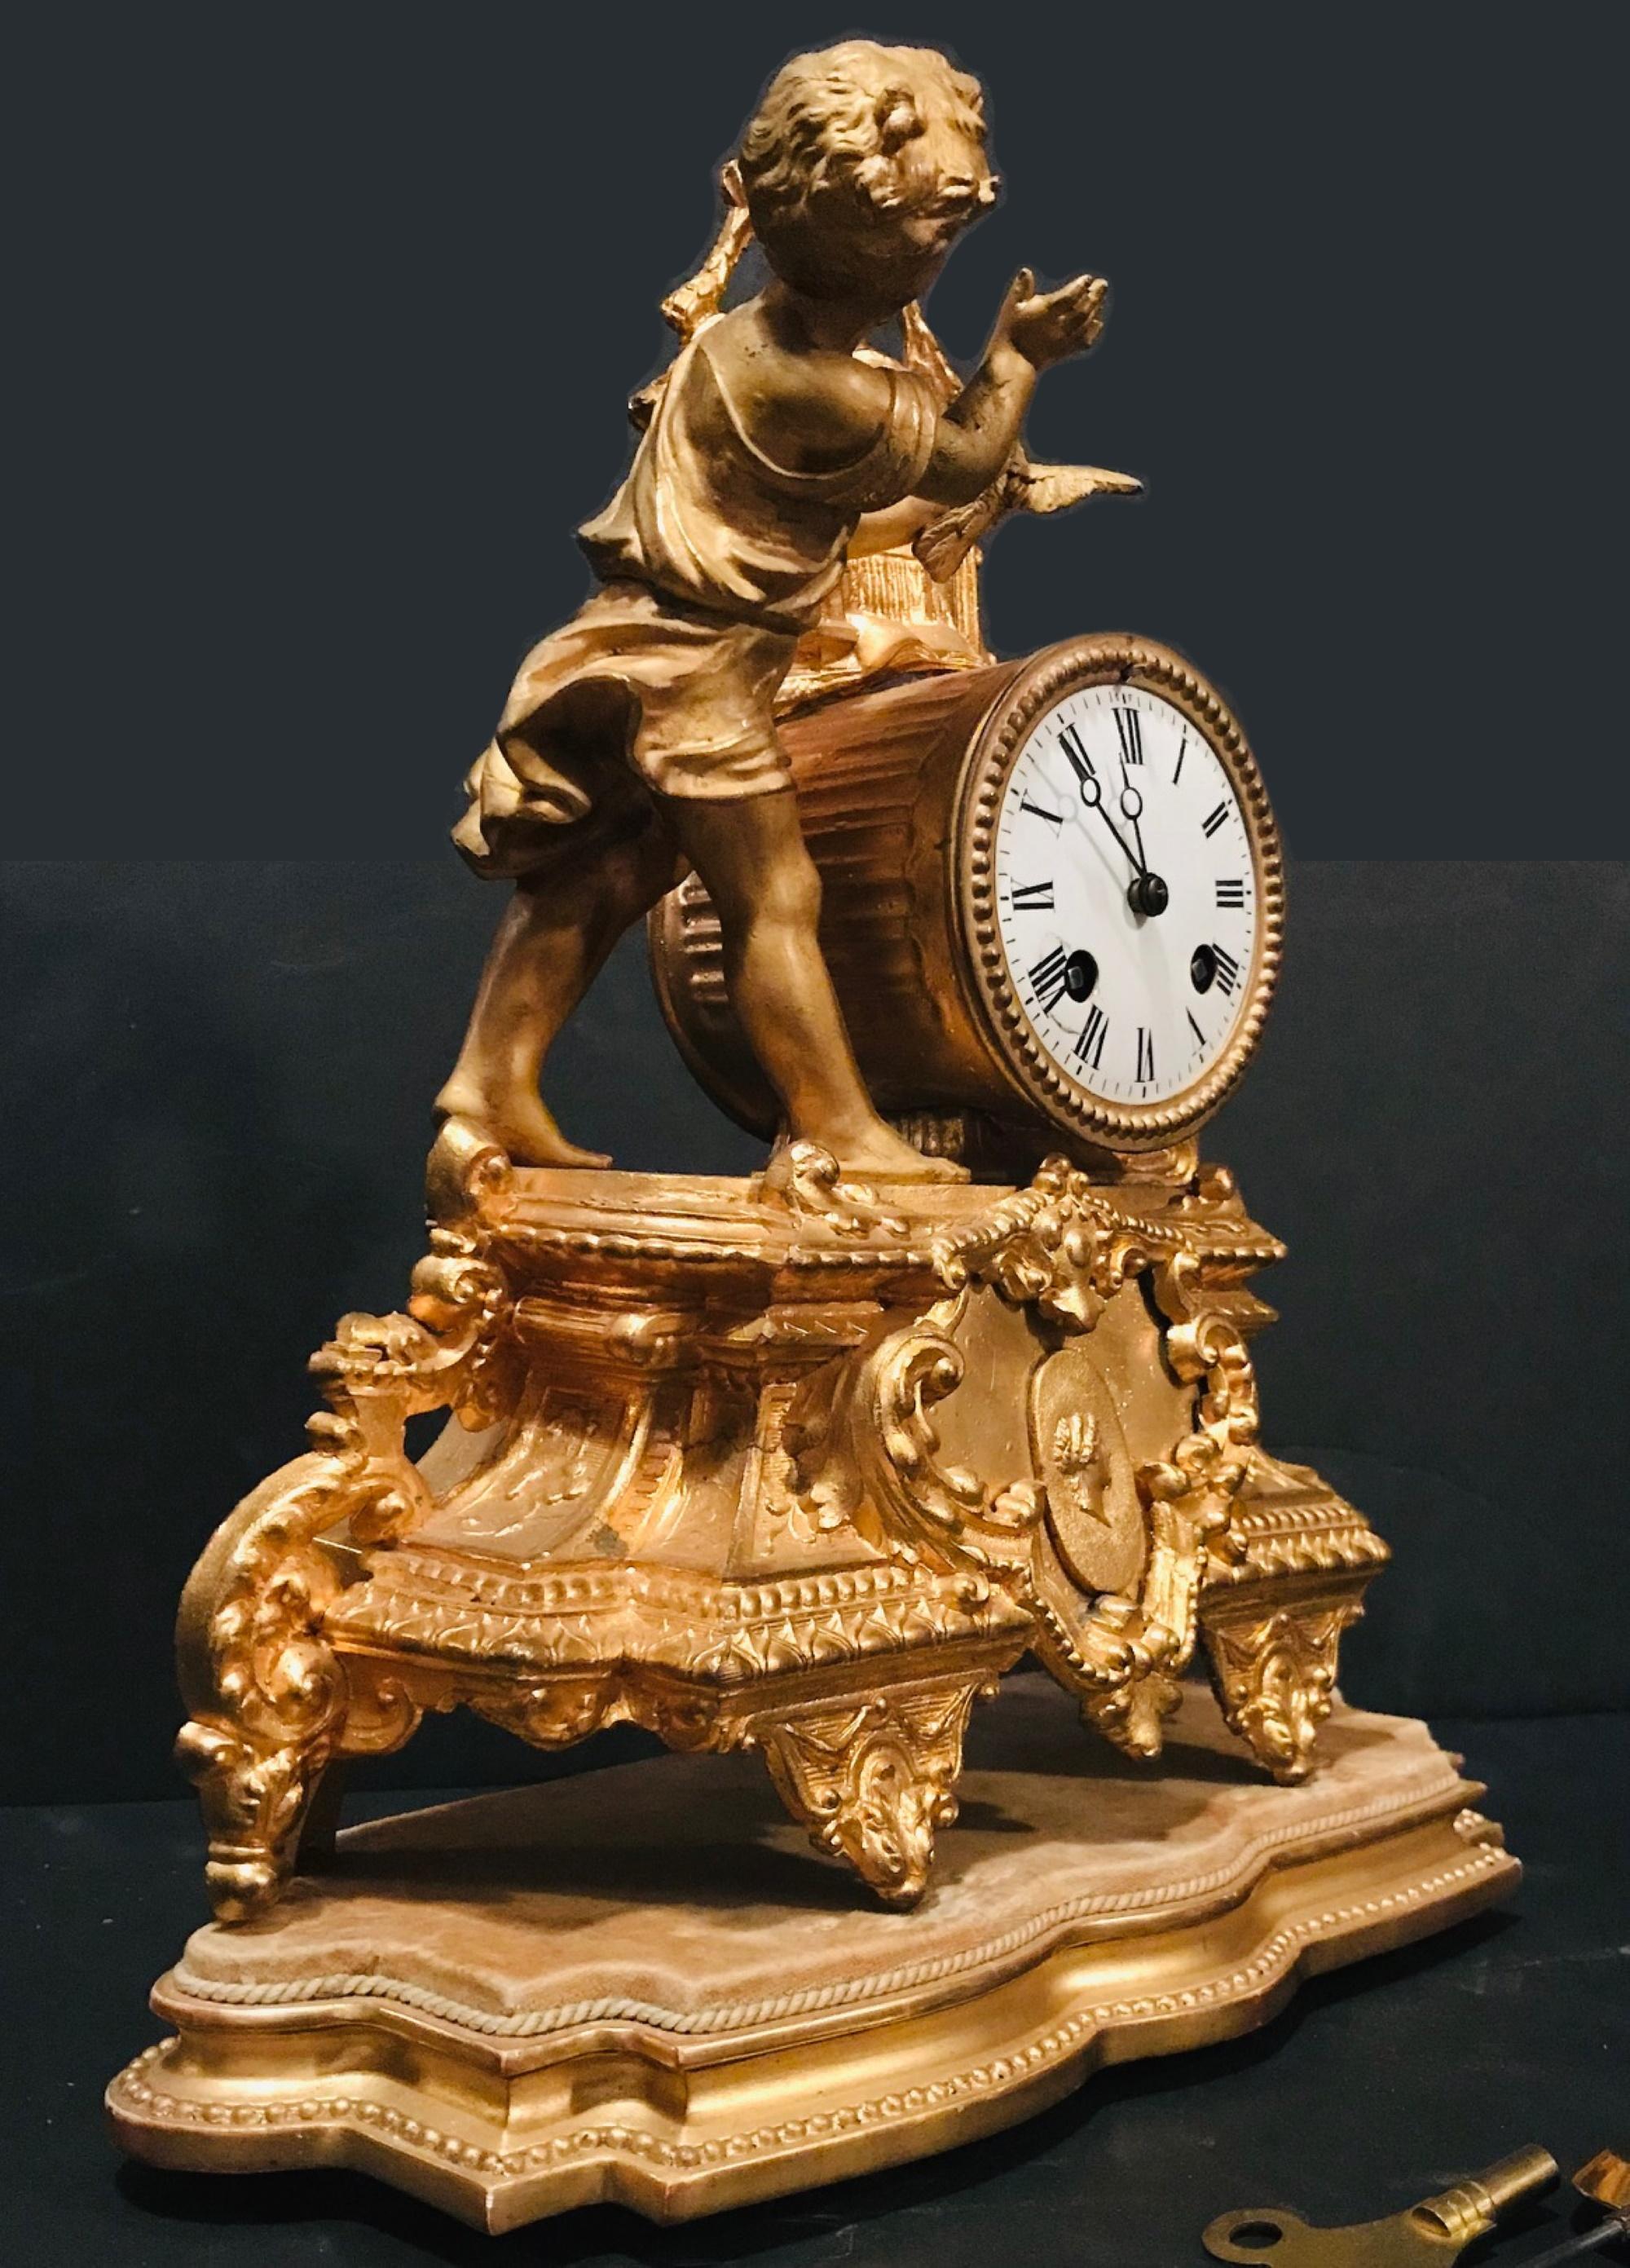 Napoleon III 19th Century French Gilt Mantel Clock with Wood Base, Girl with Bird